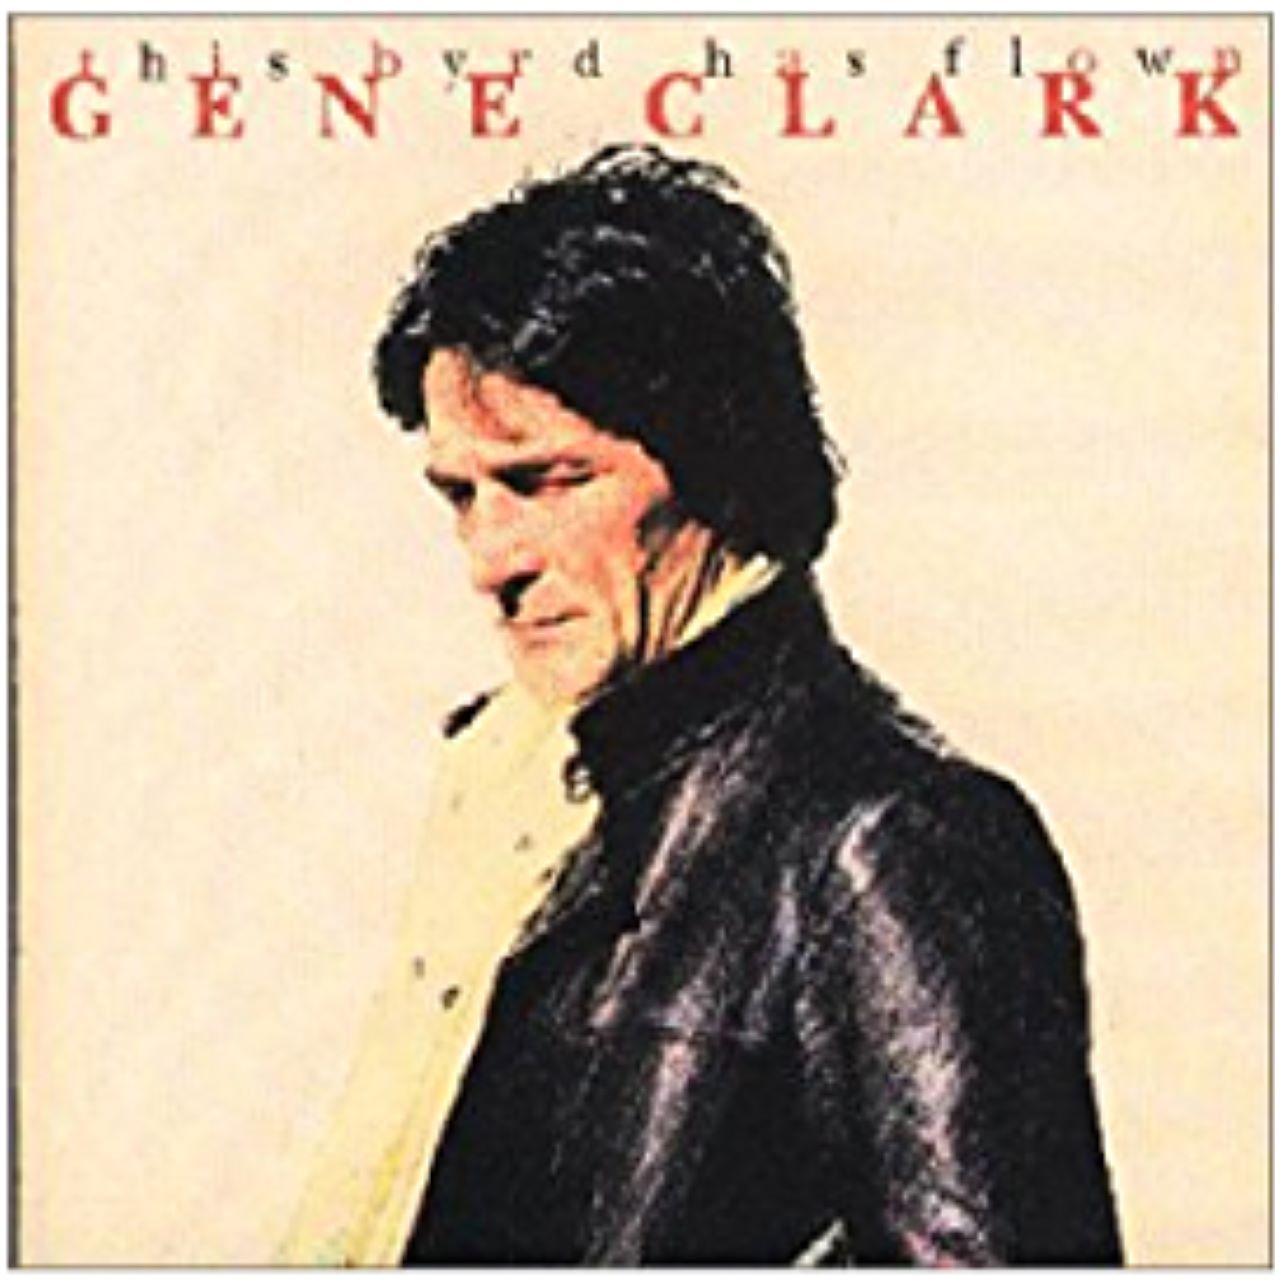 Gene Clark - This Byrd Has Flown cover album